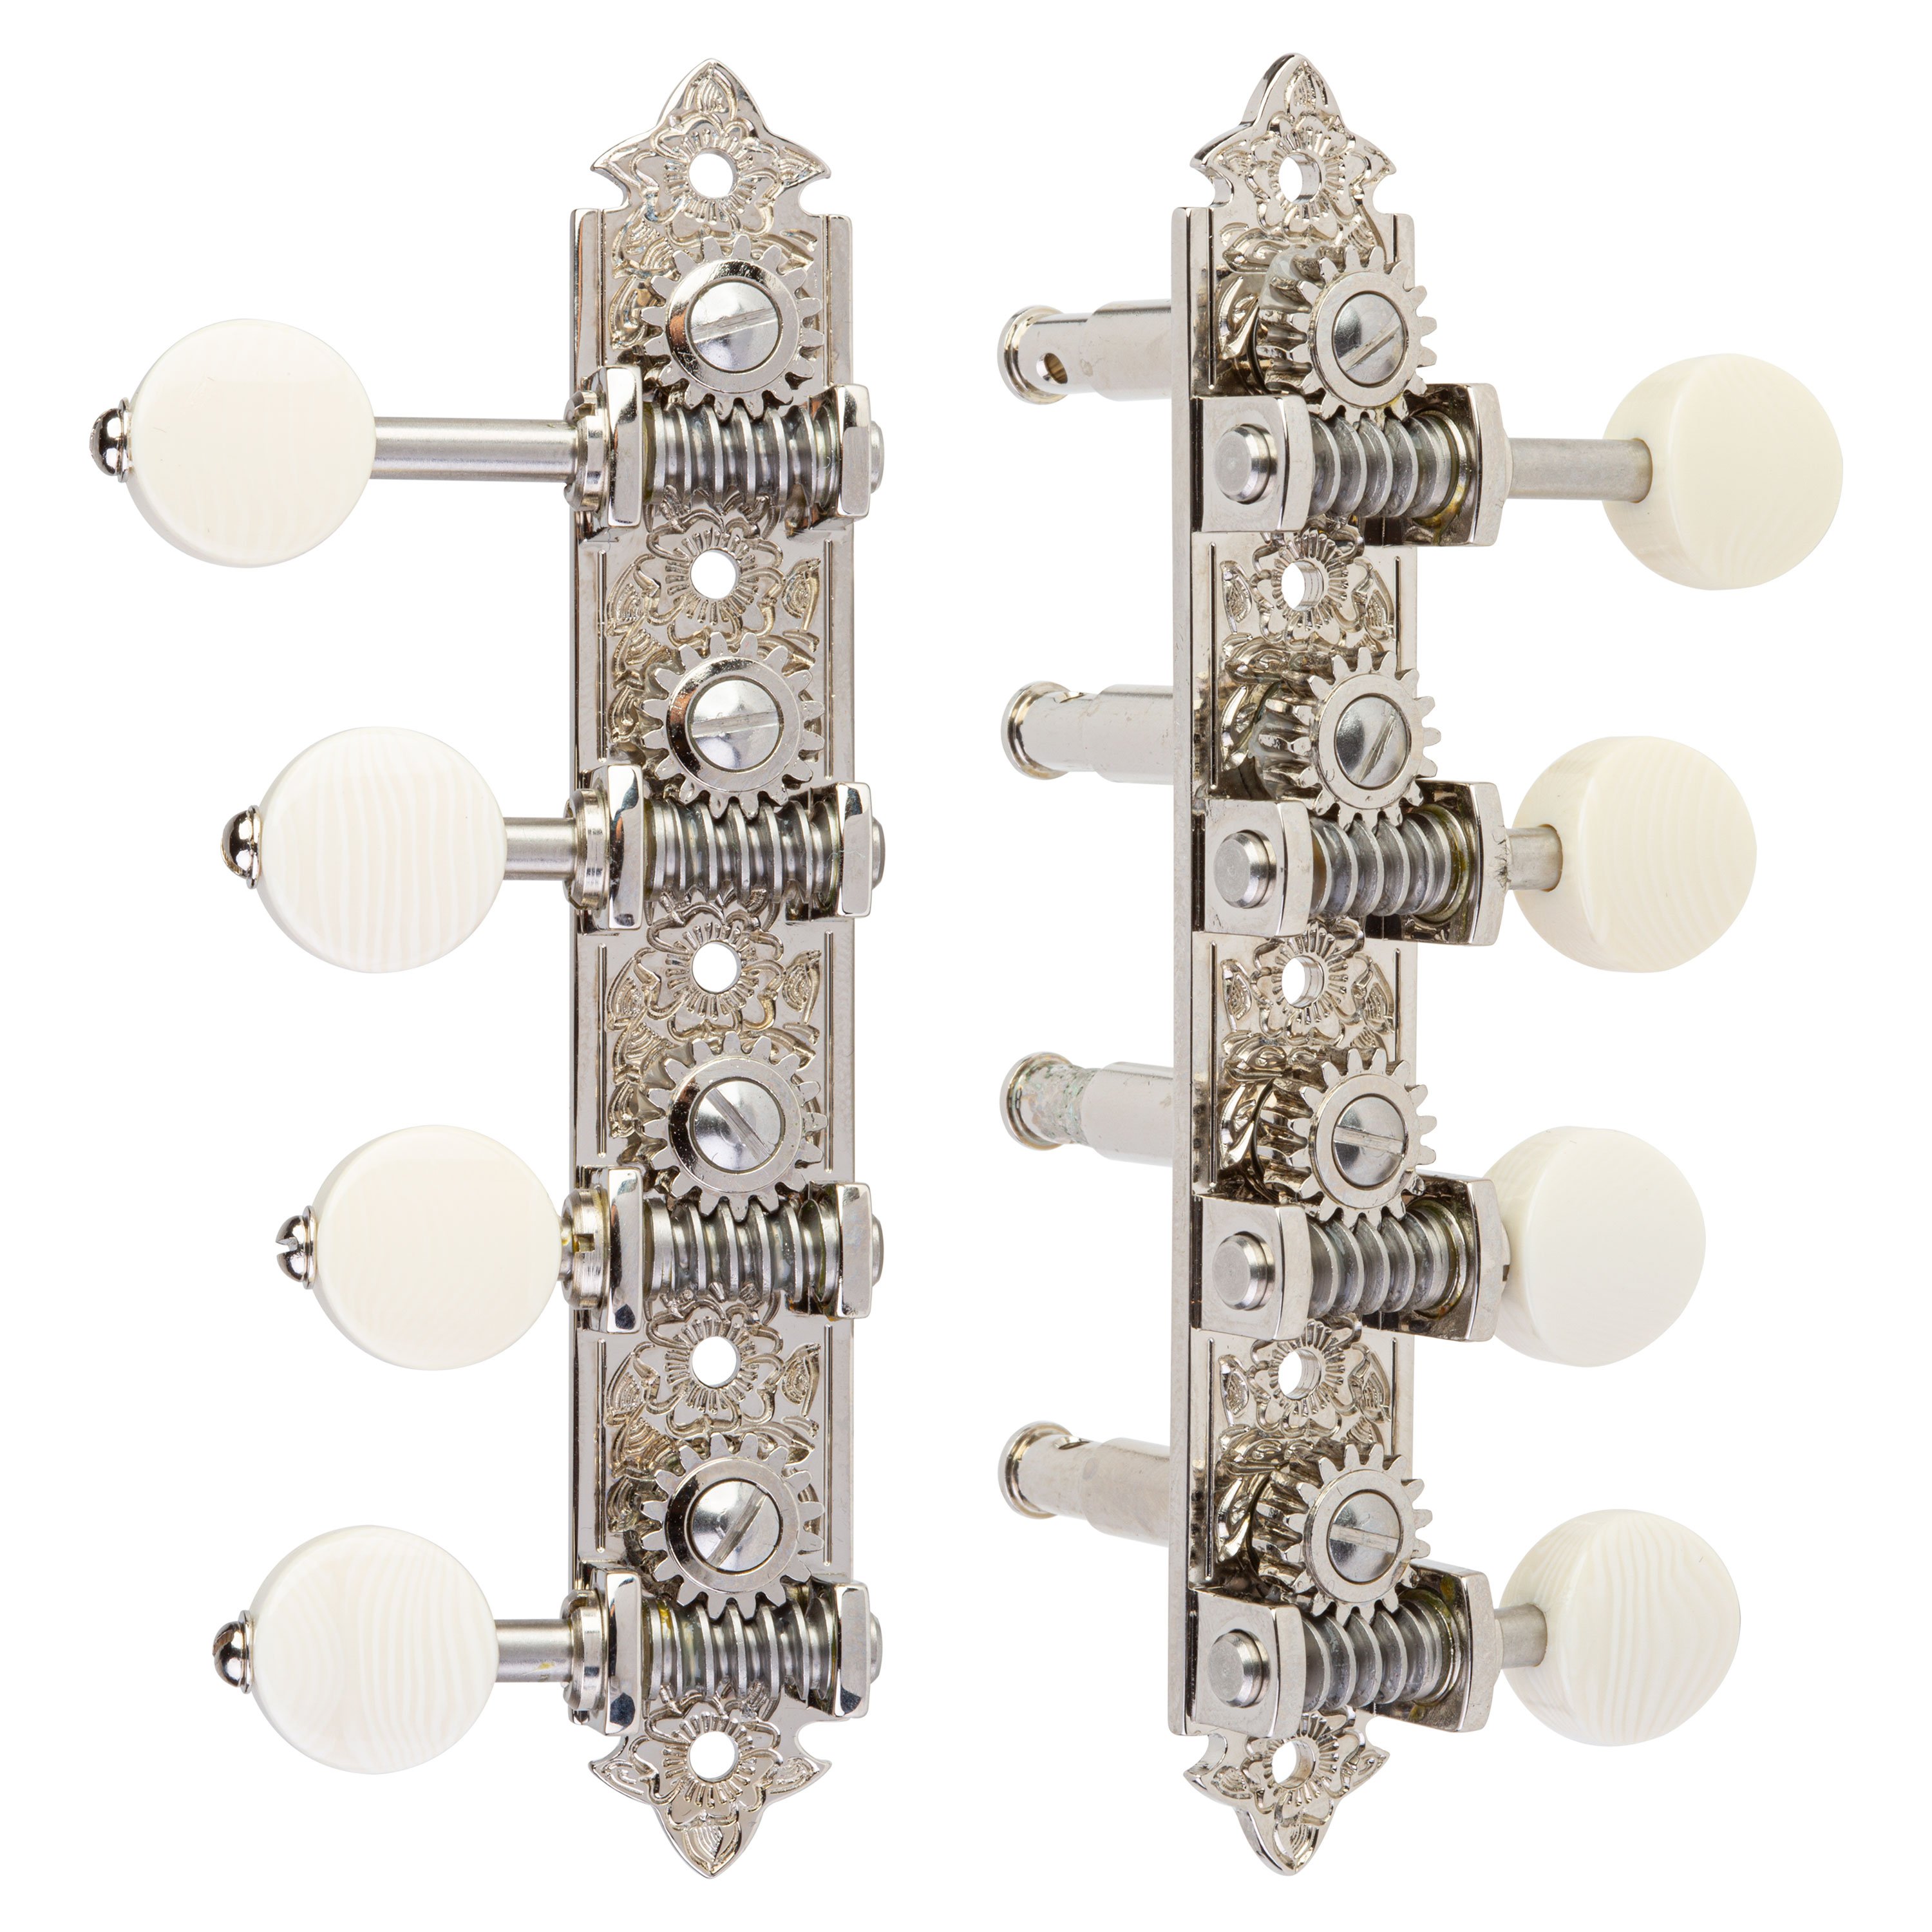 Waverly F-style Mandolin Machines with Ivoroid Knobs